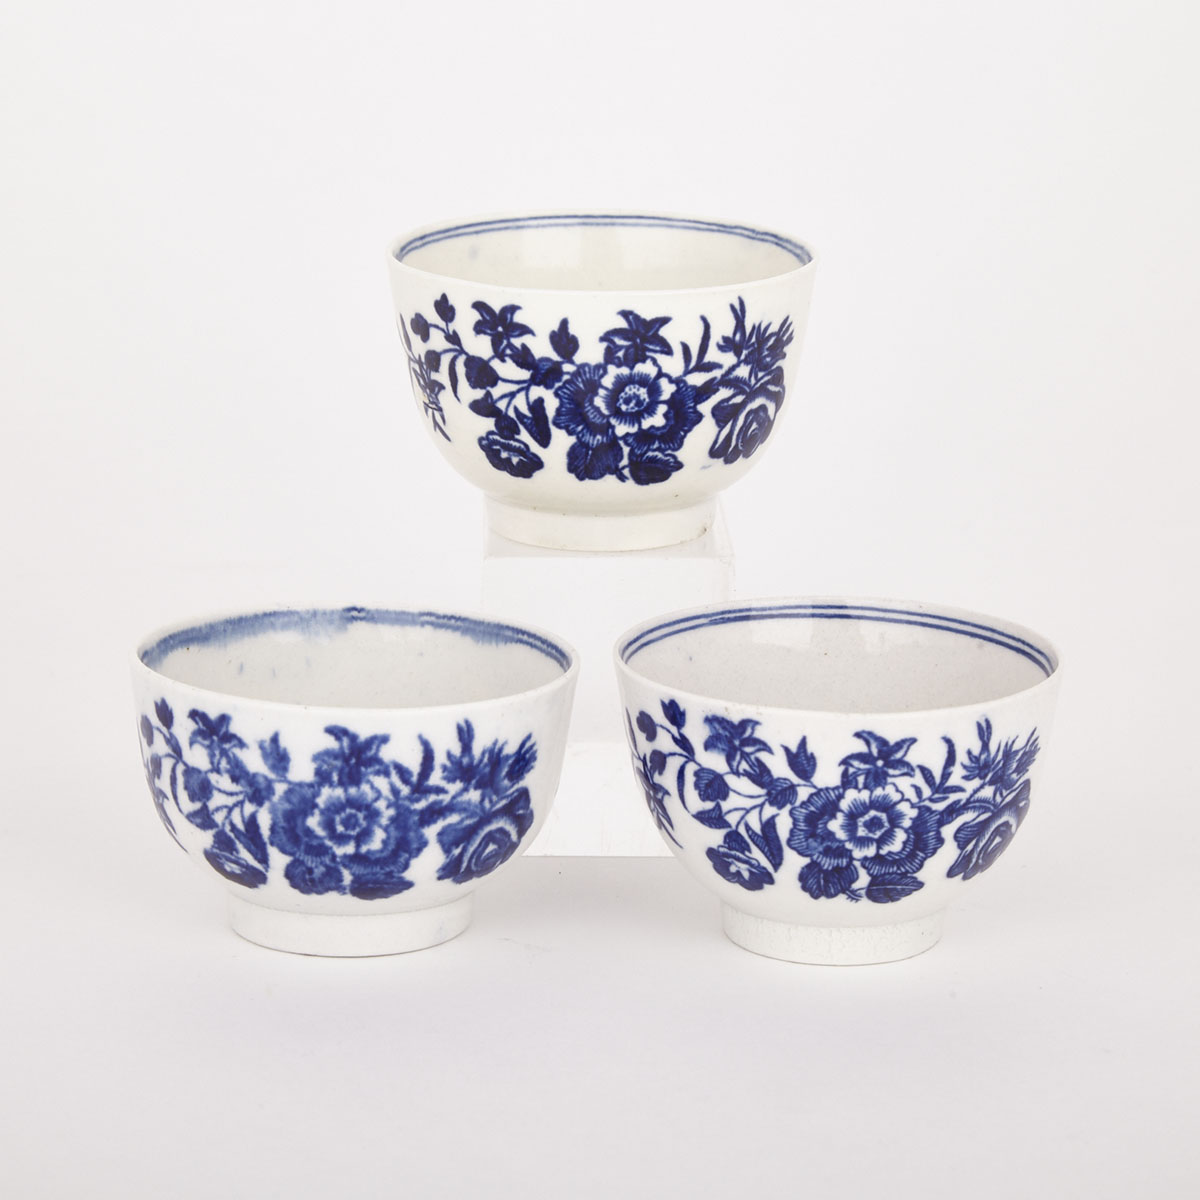 Three Worcester ‘Three Flowers’ Pattern Tea Bowls, c.1770-80